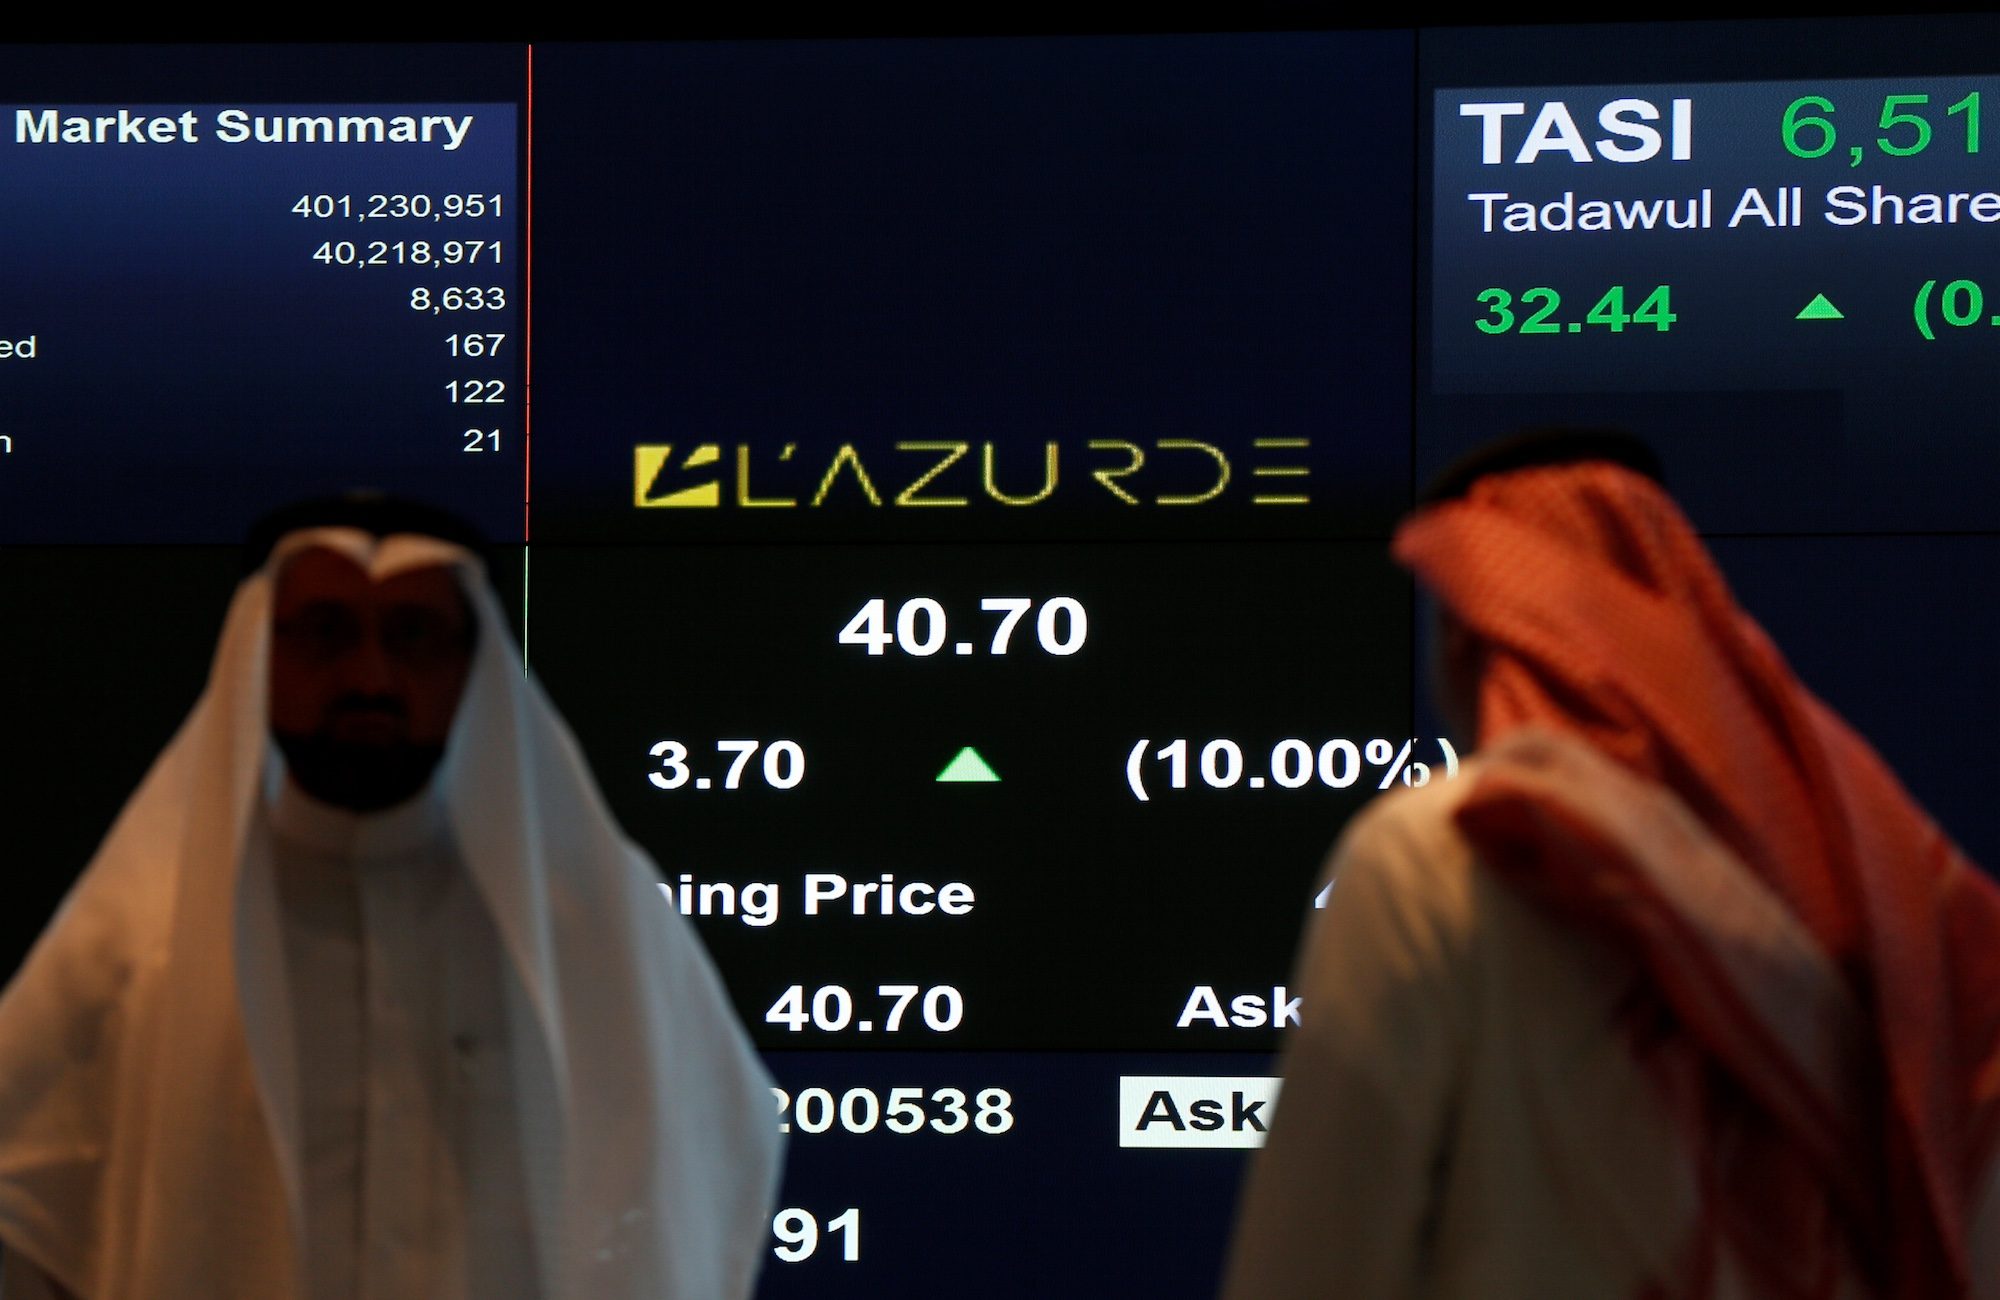 Traders monitor a screen showing stock information at the Tadawul in Riyadh